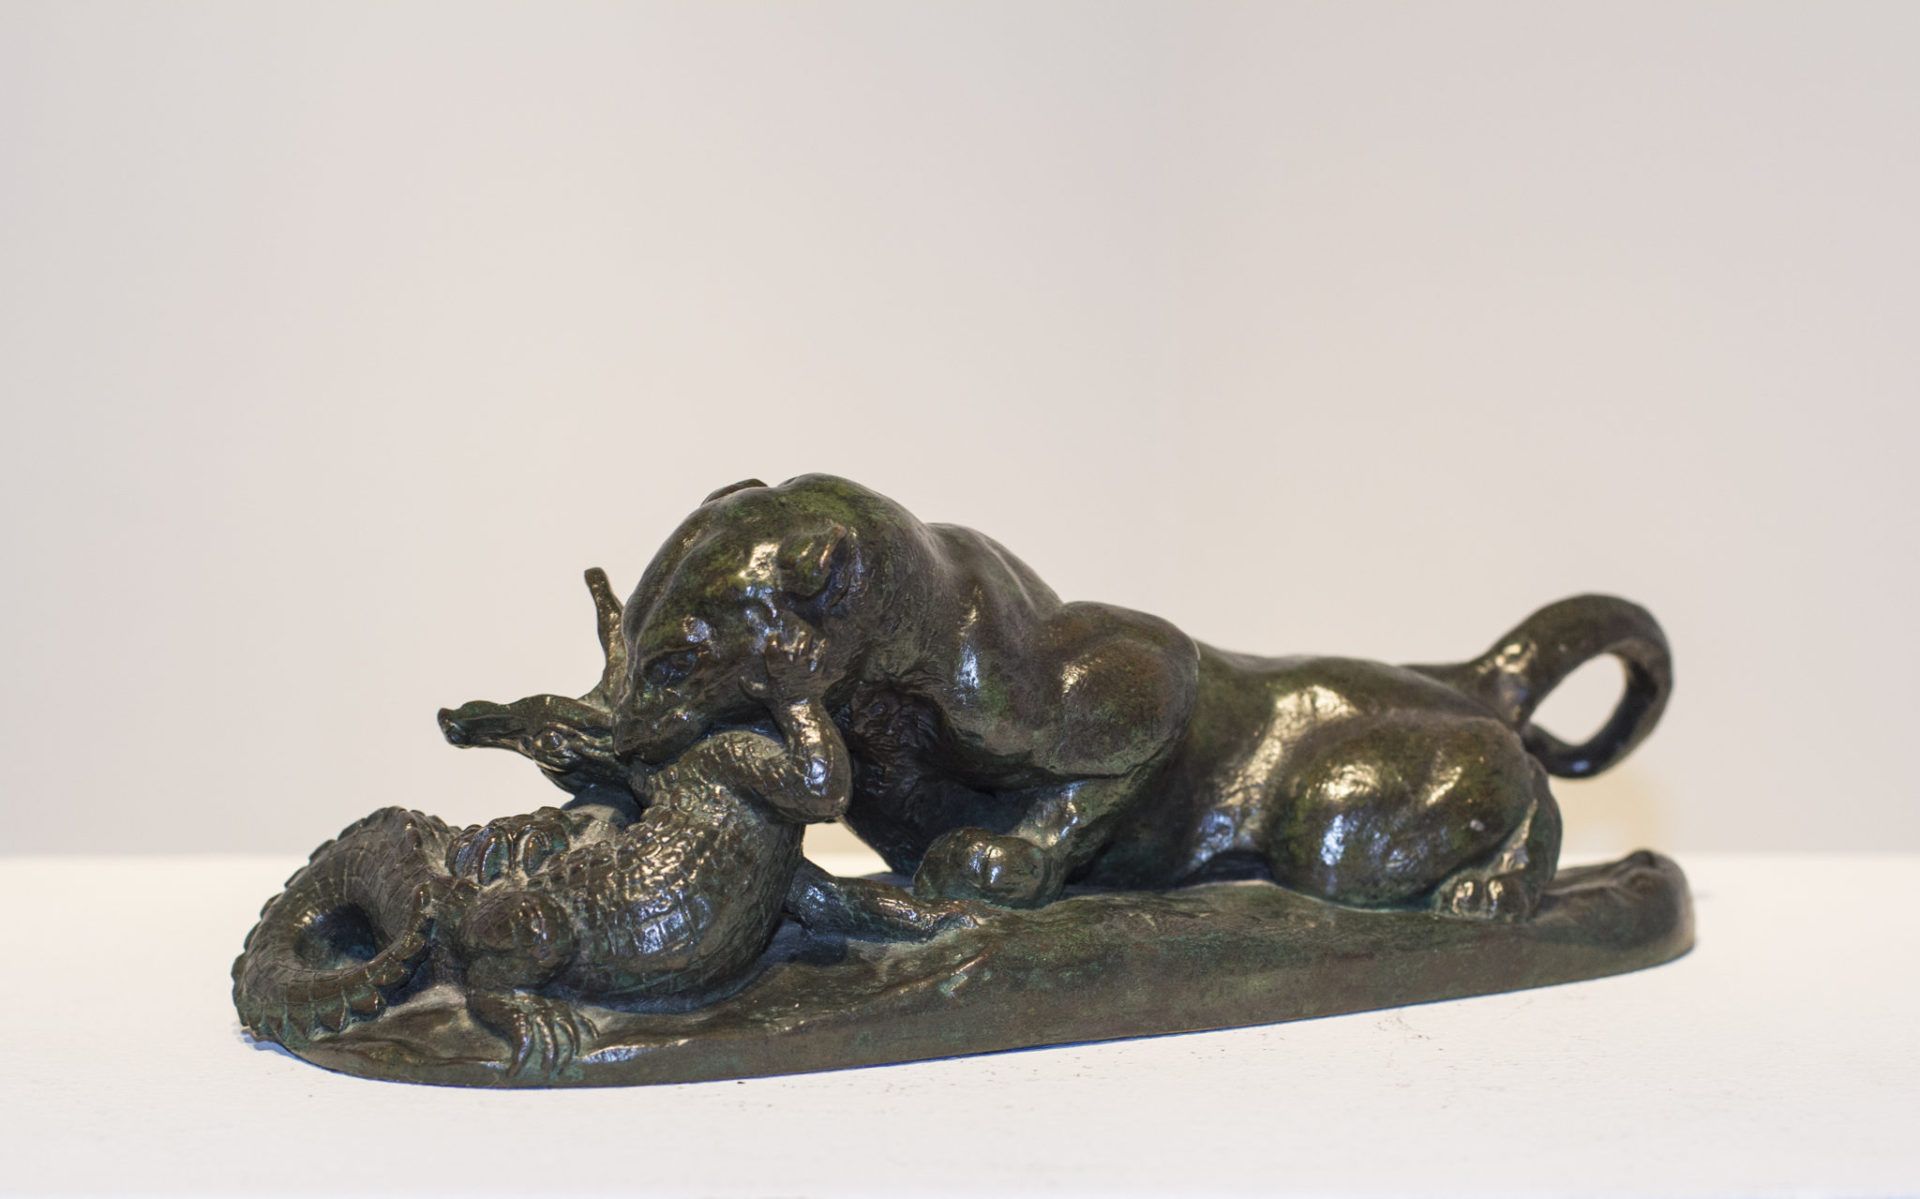 Alt text: Bronze sculpture of a jaguar with a crocodile's neck in its mouth